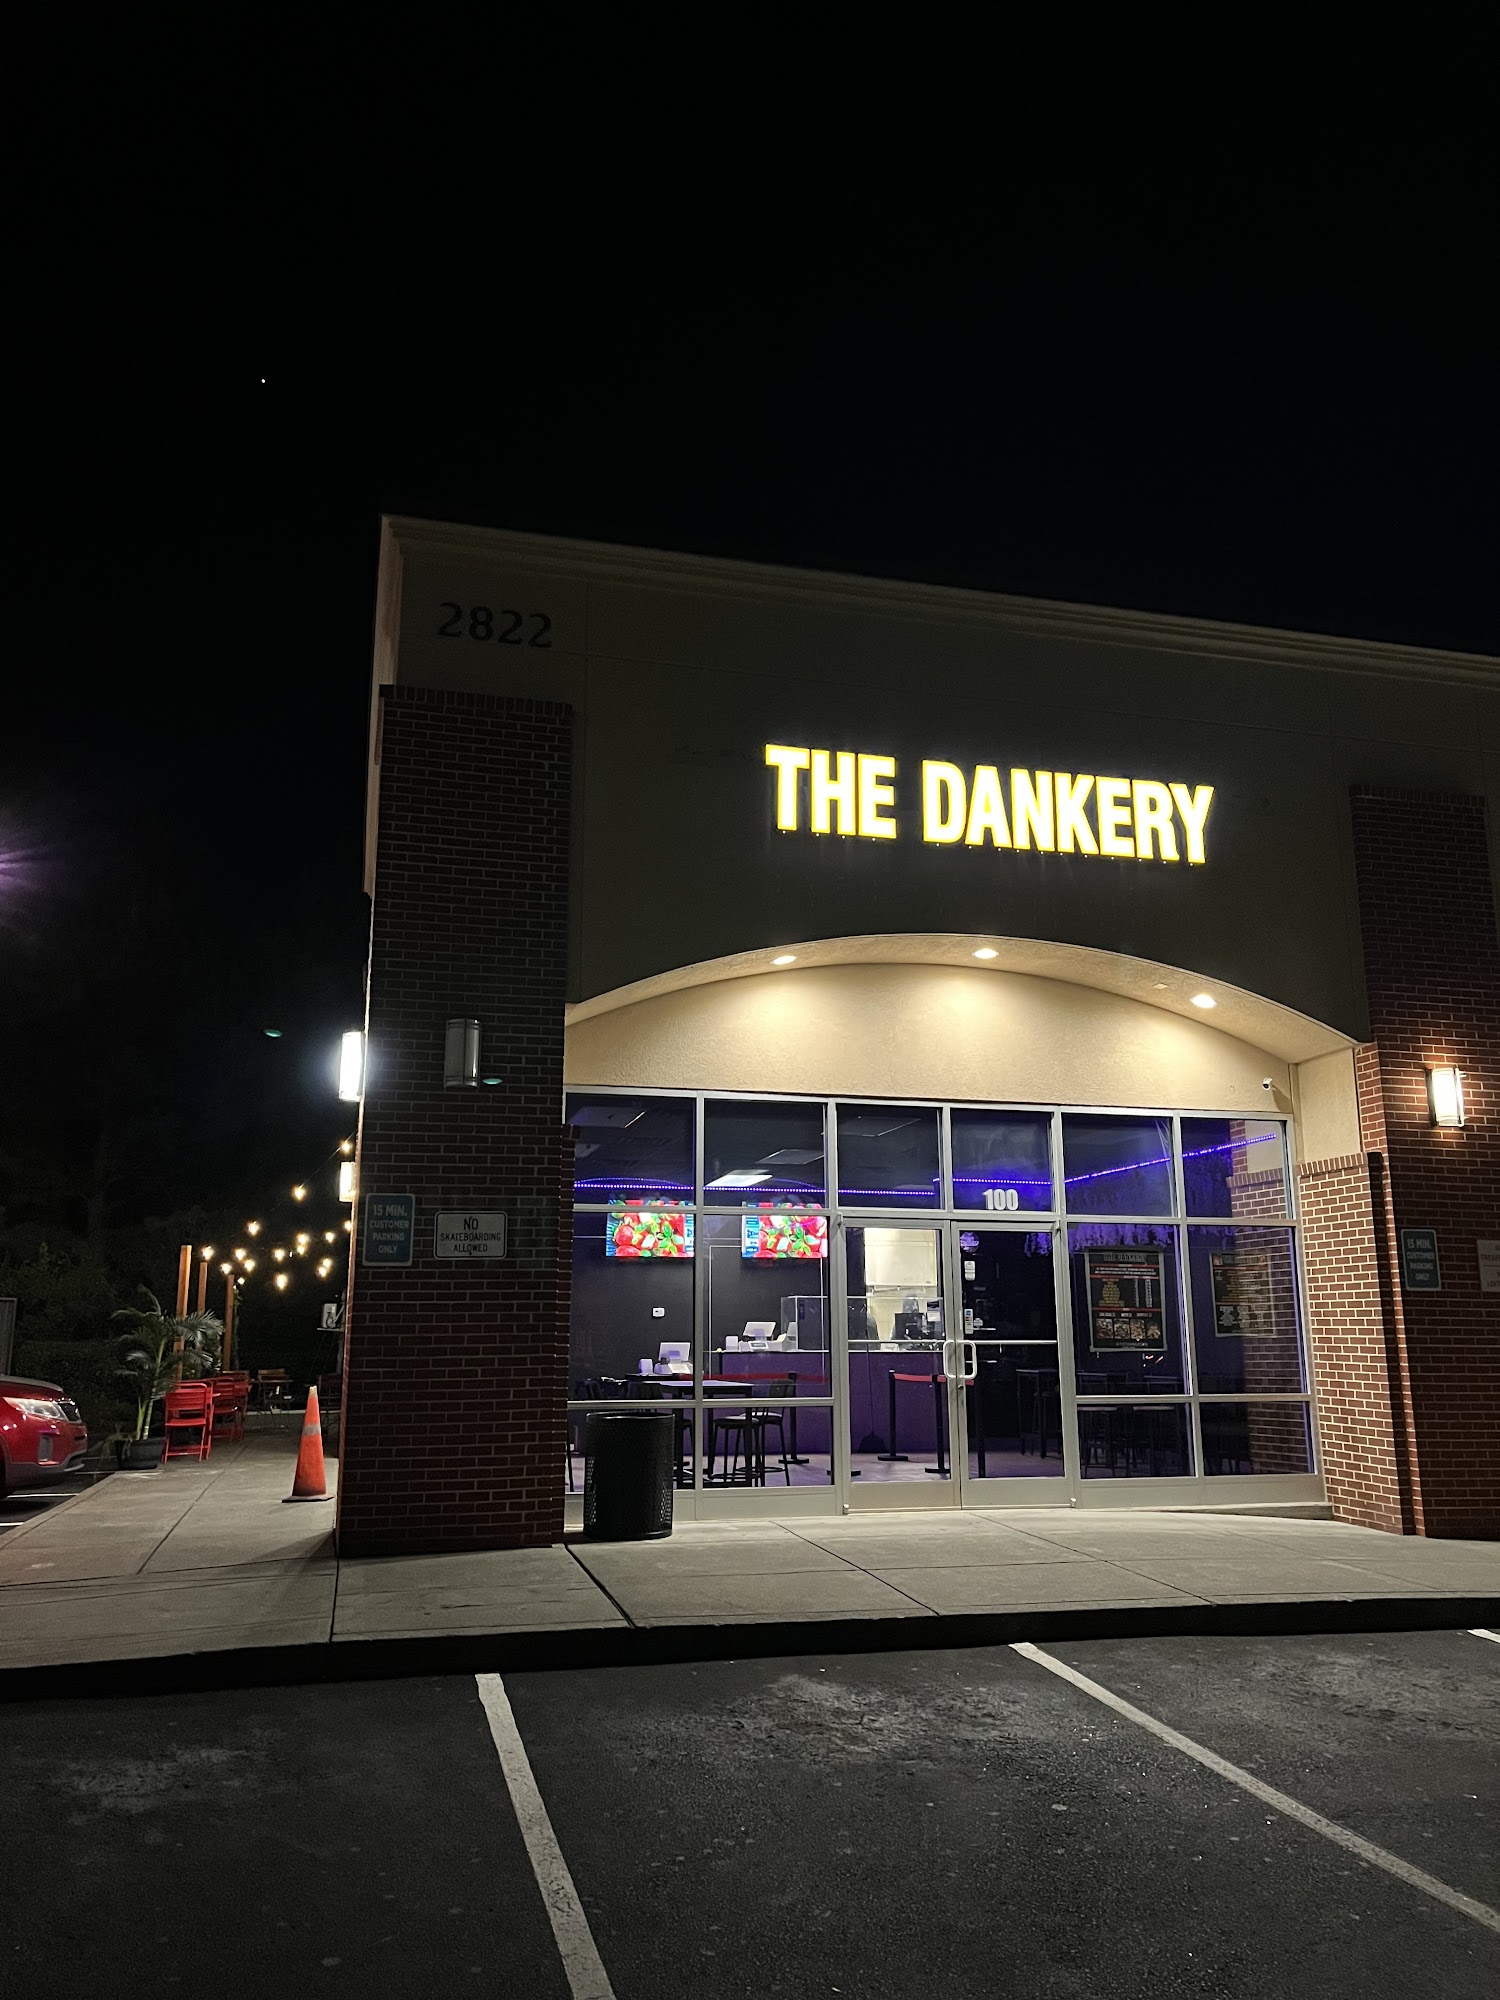 The Dankery